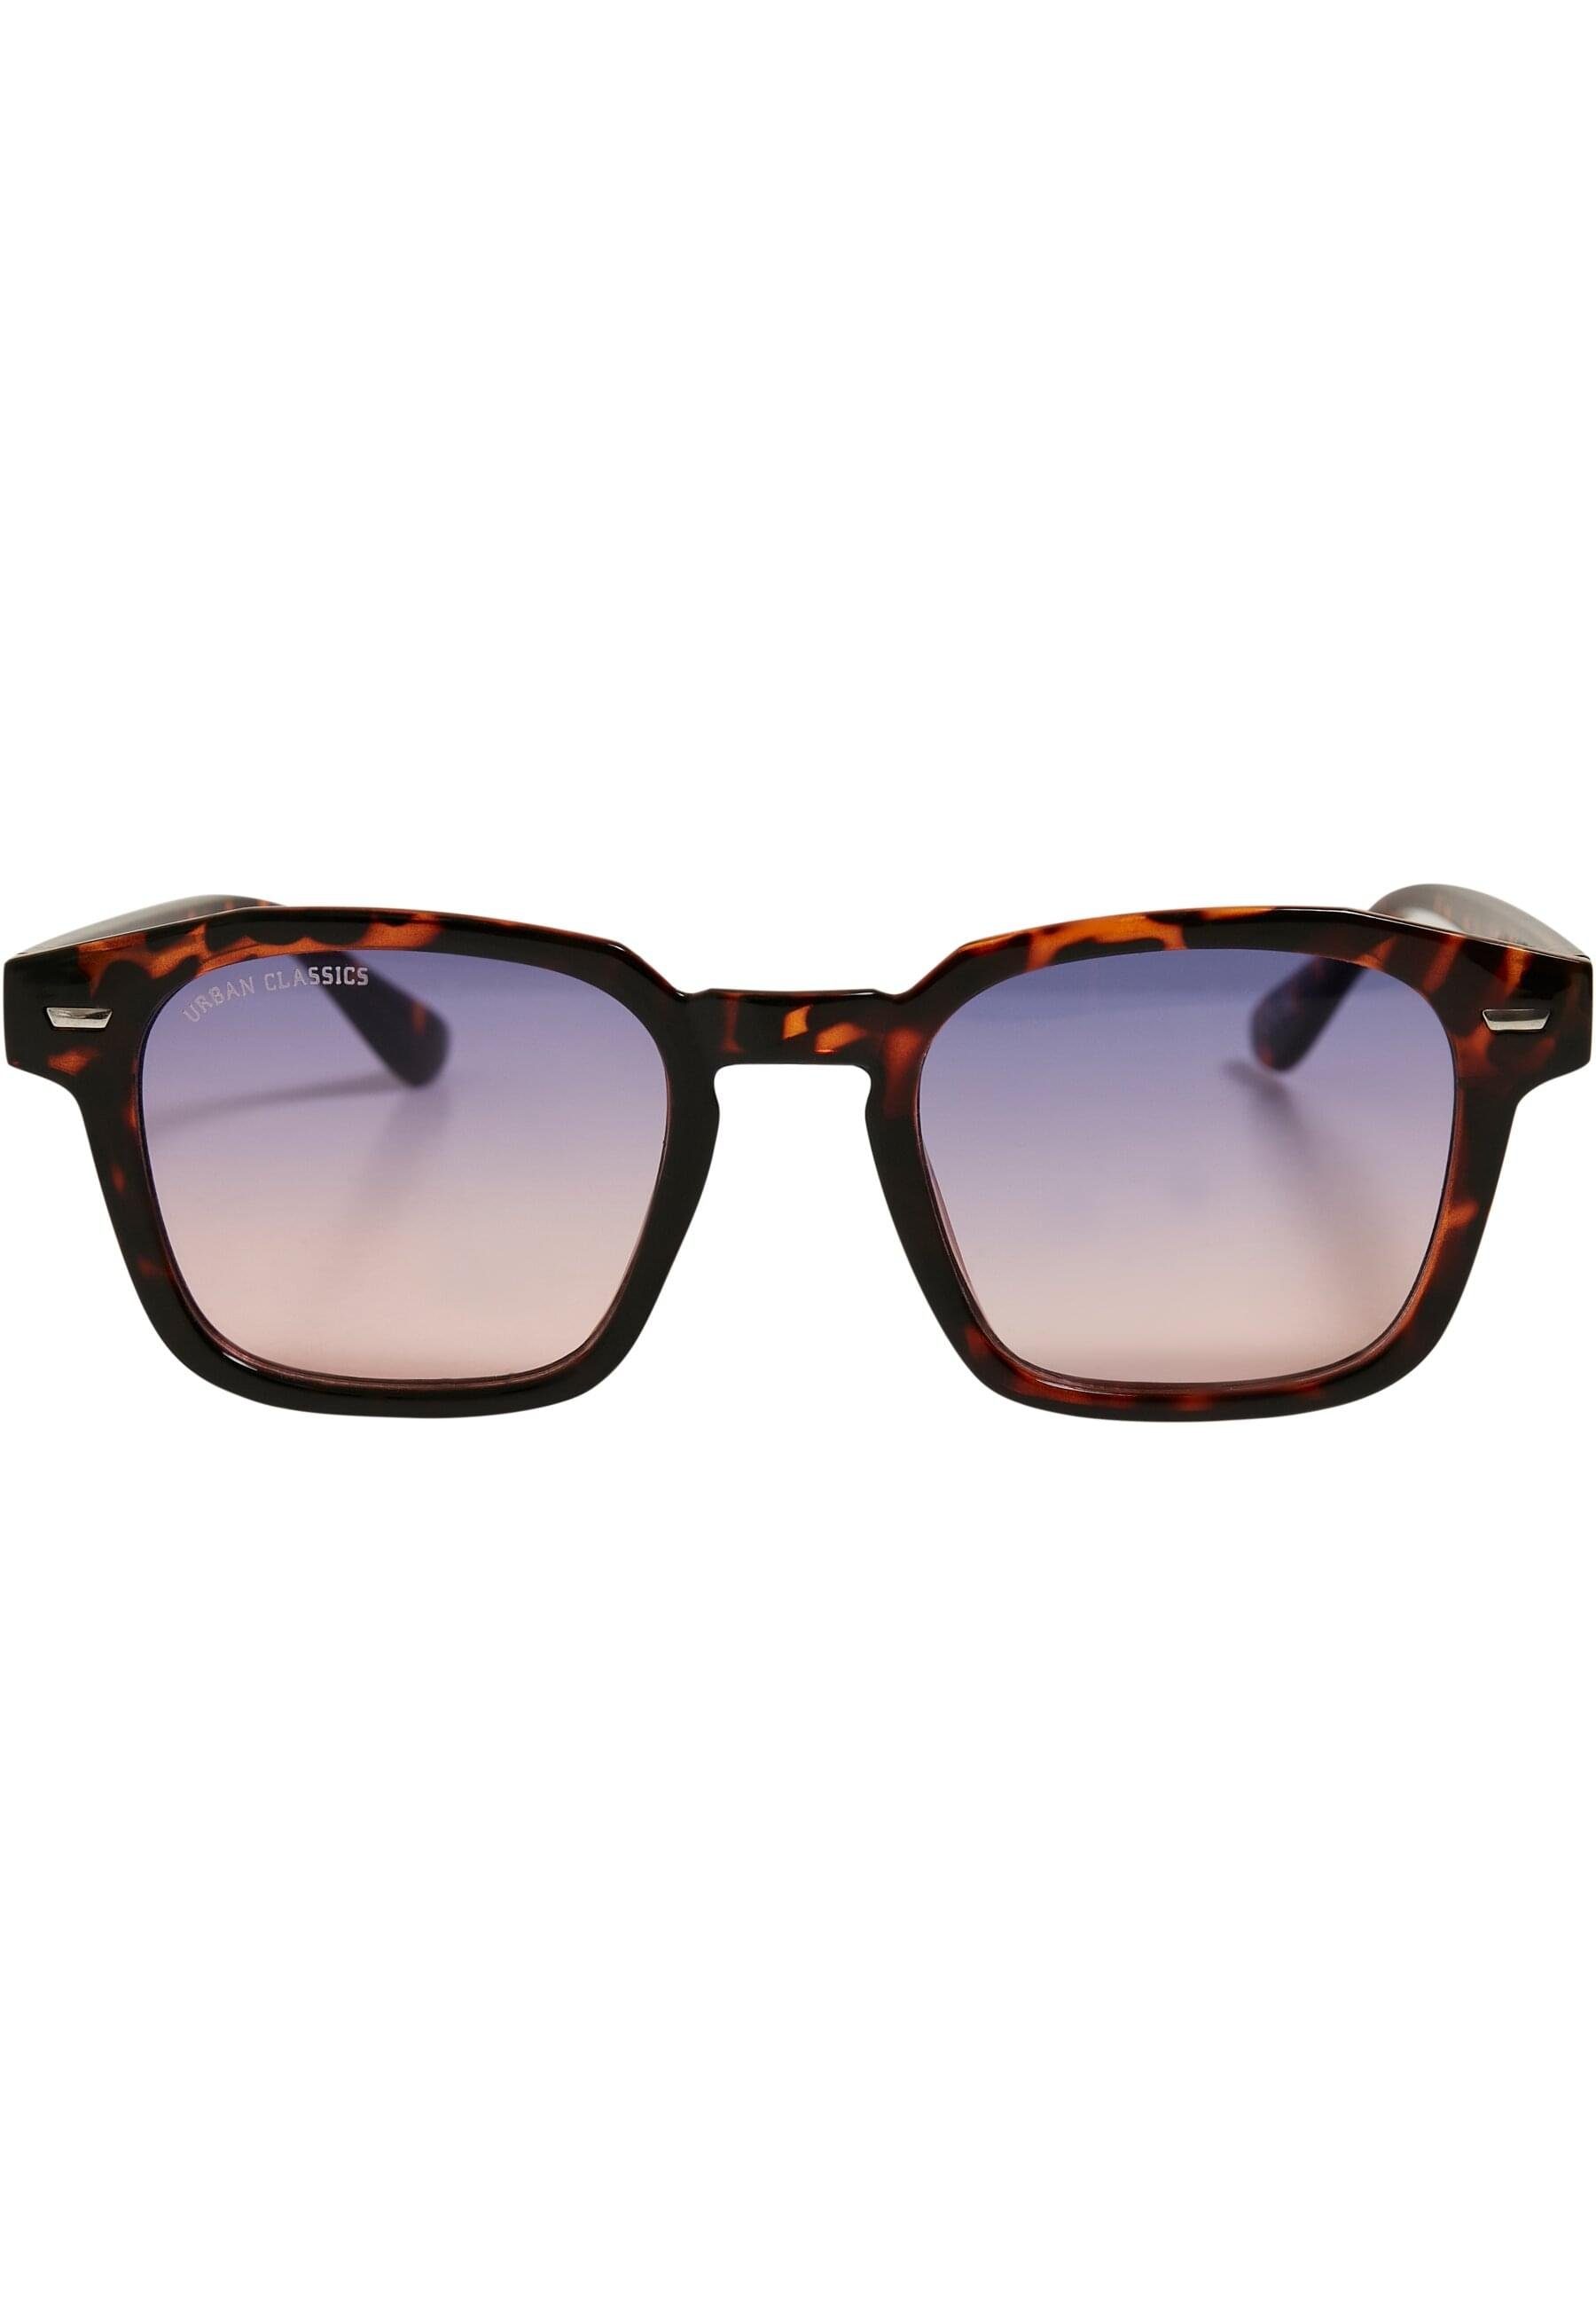 Unisex Sunglasses Case CLASSICS URBAN amber/lilac With Sonnenbrille Maui